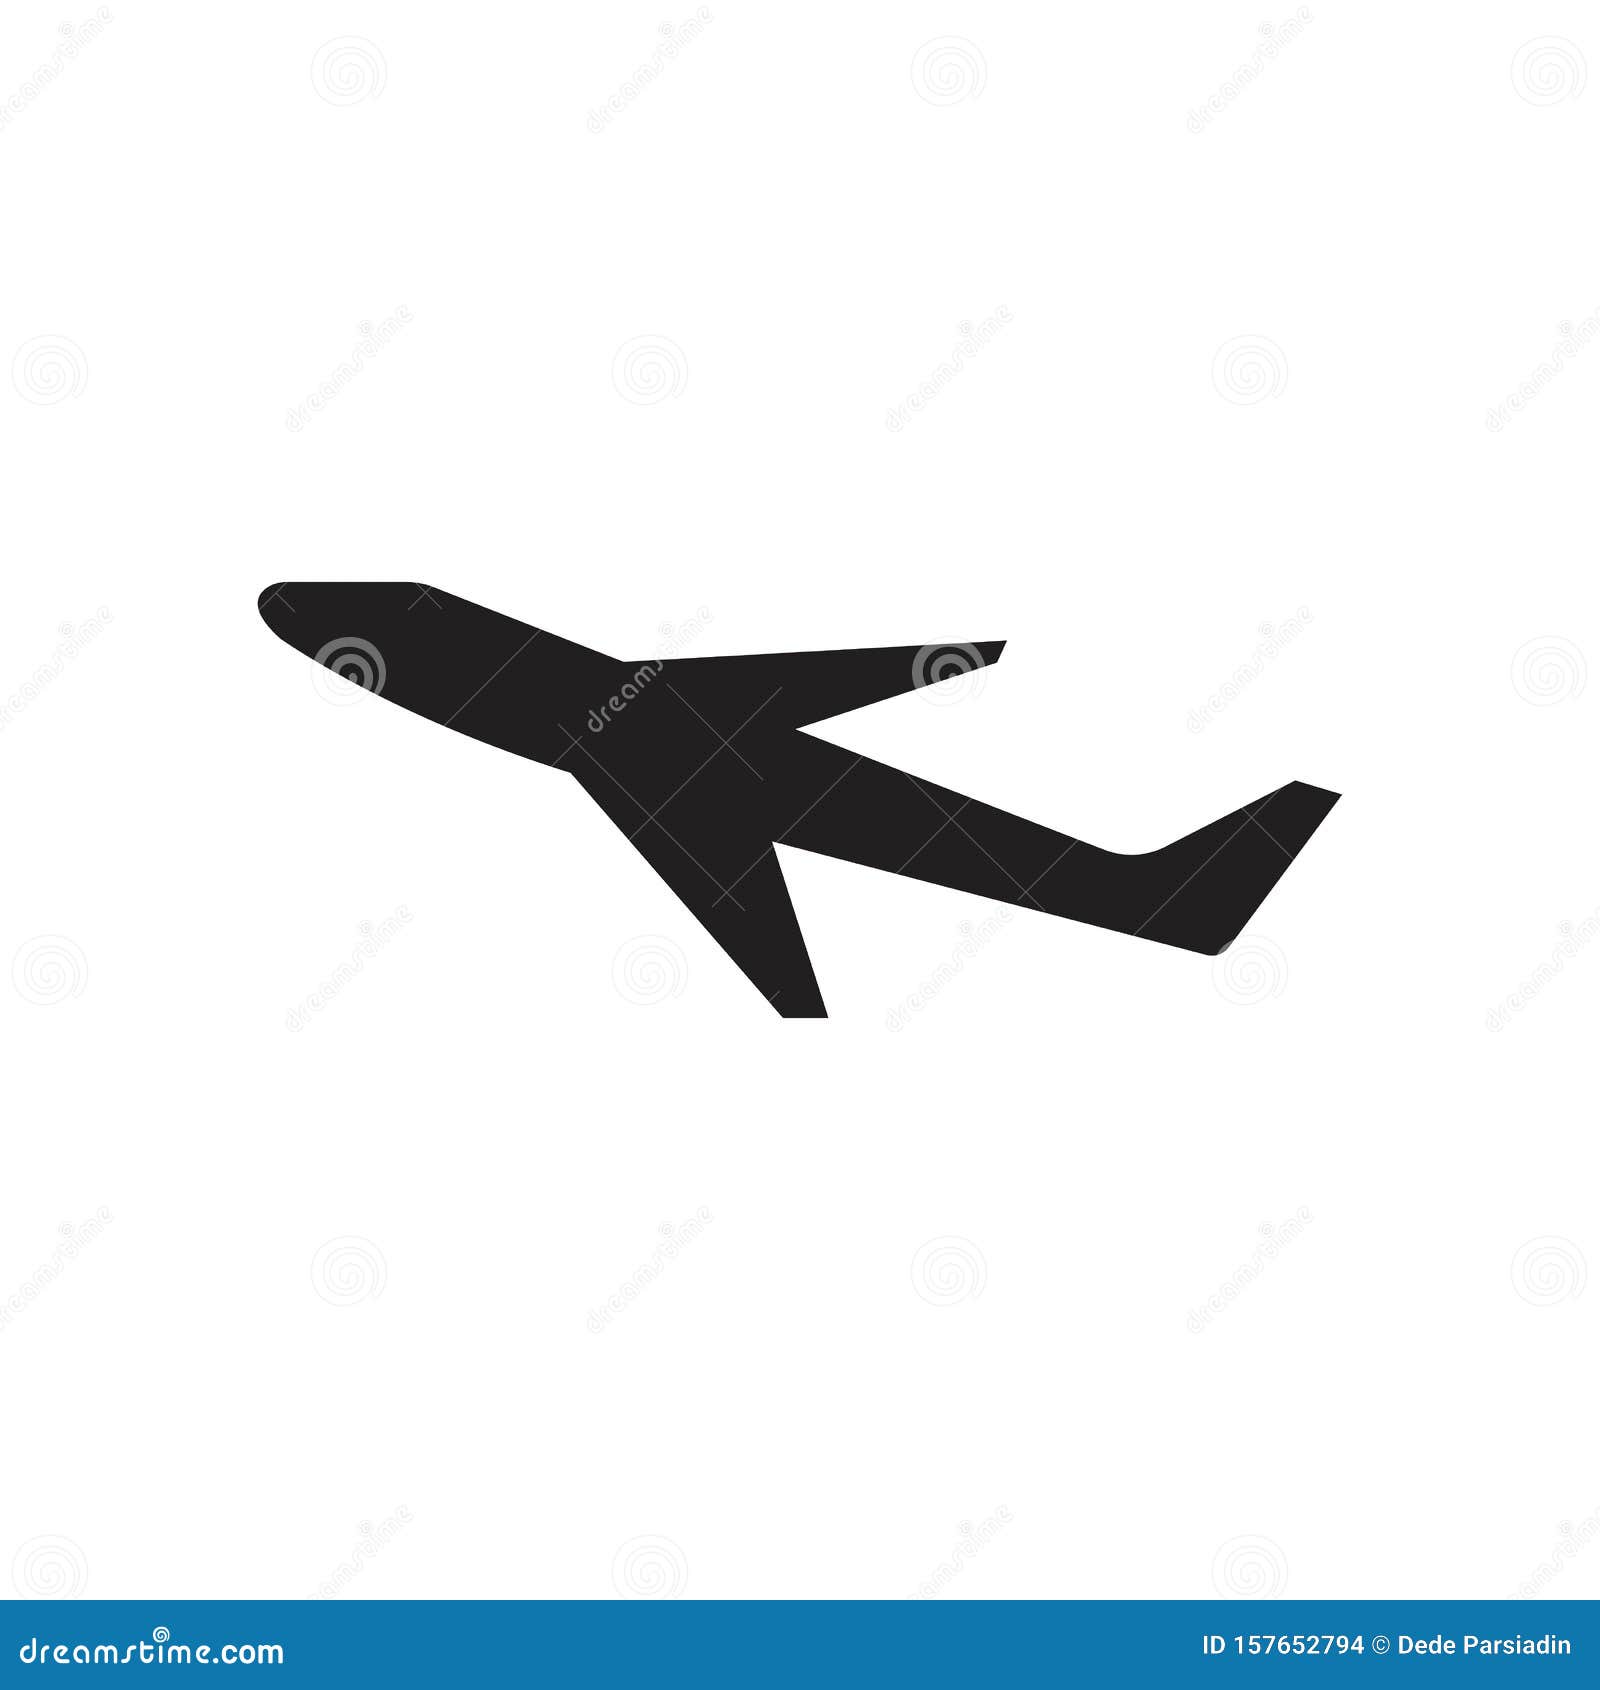 Design Your Own Airplane Logo Online Travel Logos